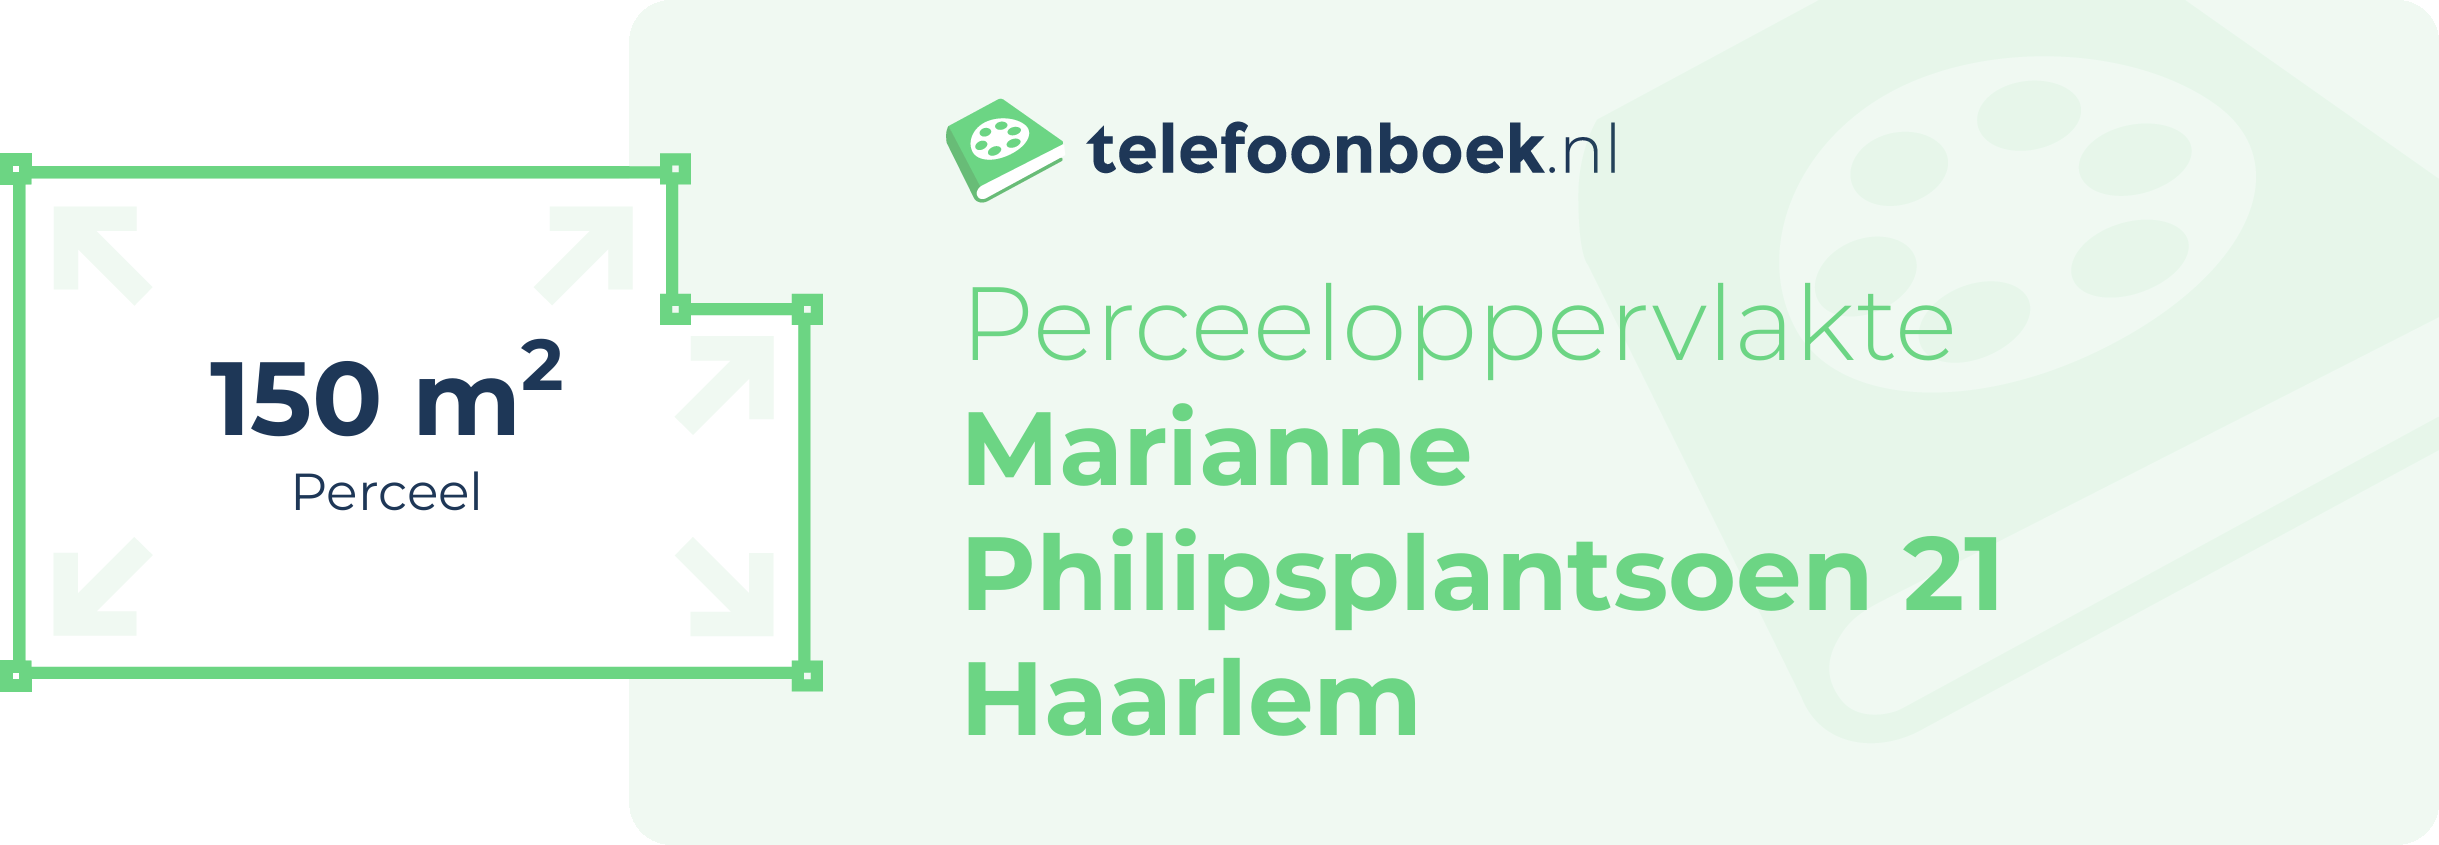 Perceeloppervlakte Marianne Philipsplantsoen 21 Haarlem